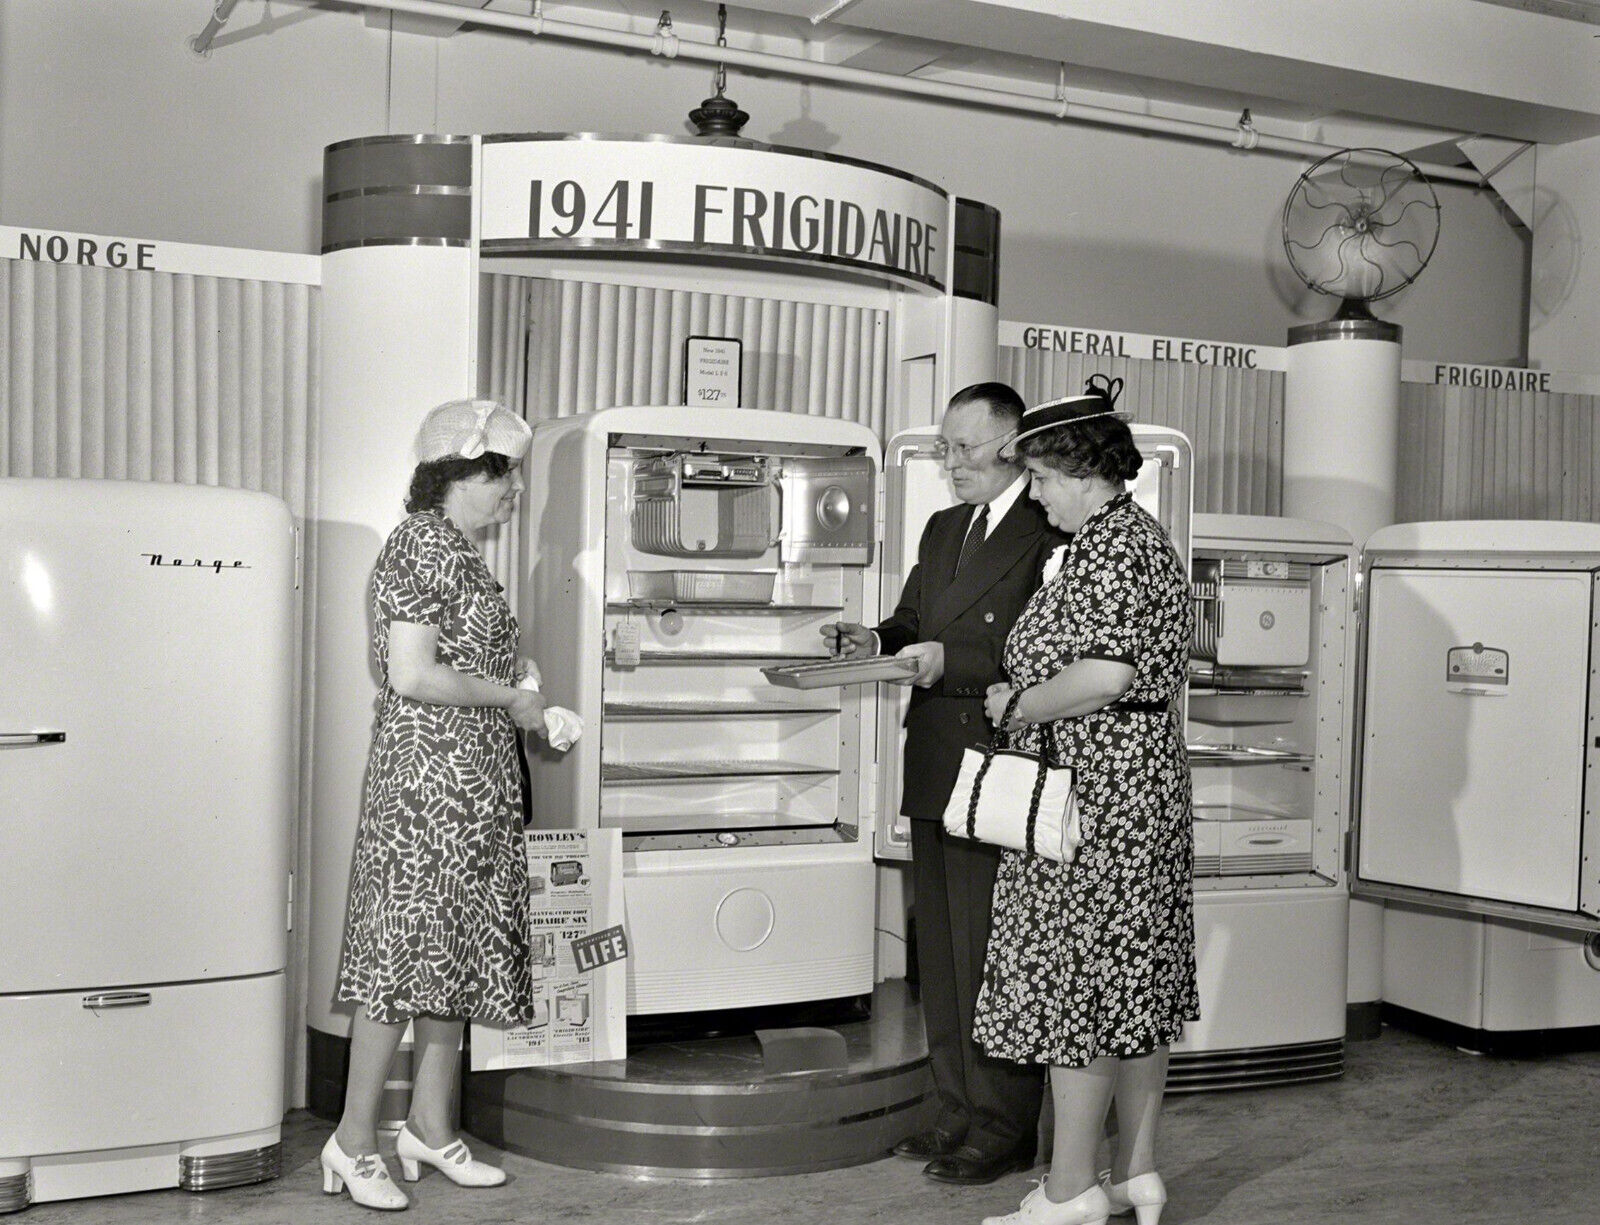 1941 Michigan Appliance Trade show Frigidaire Exhibit 8 x 10  Photograph